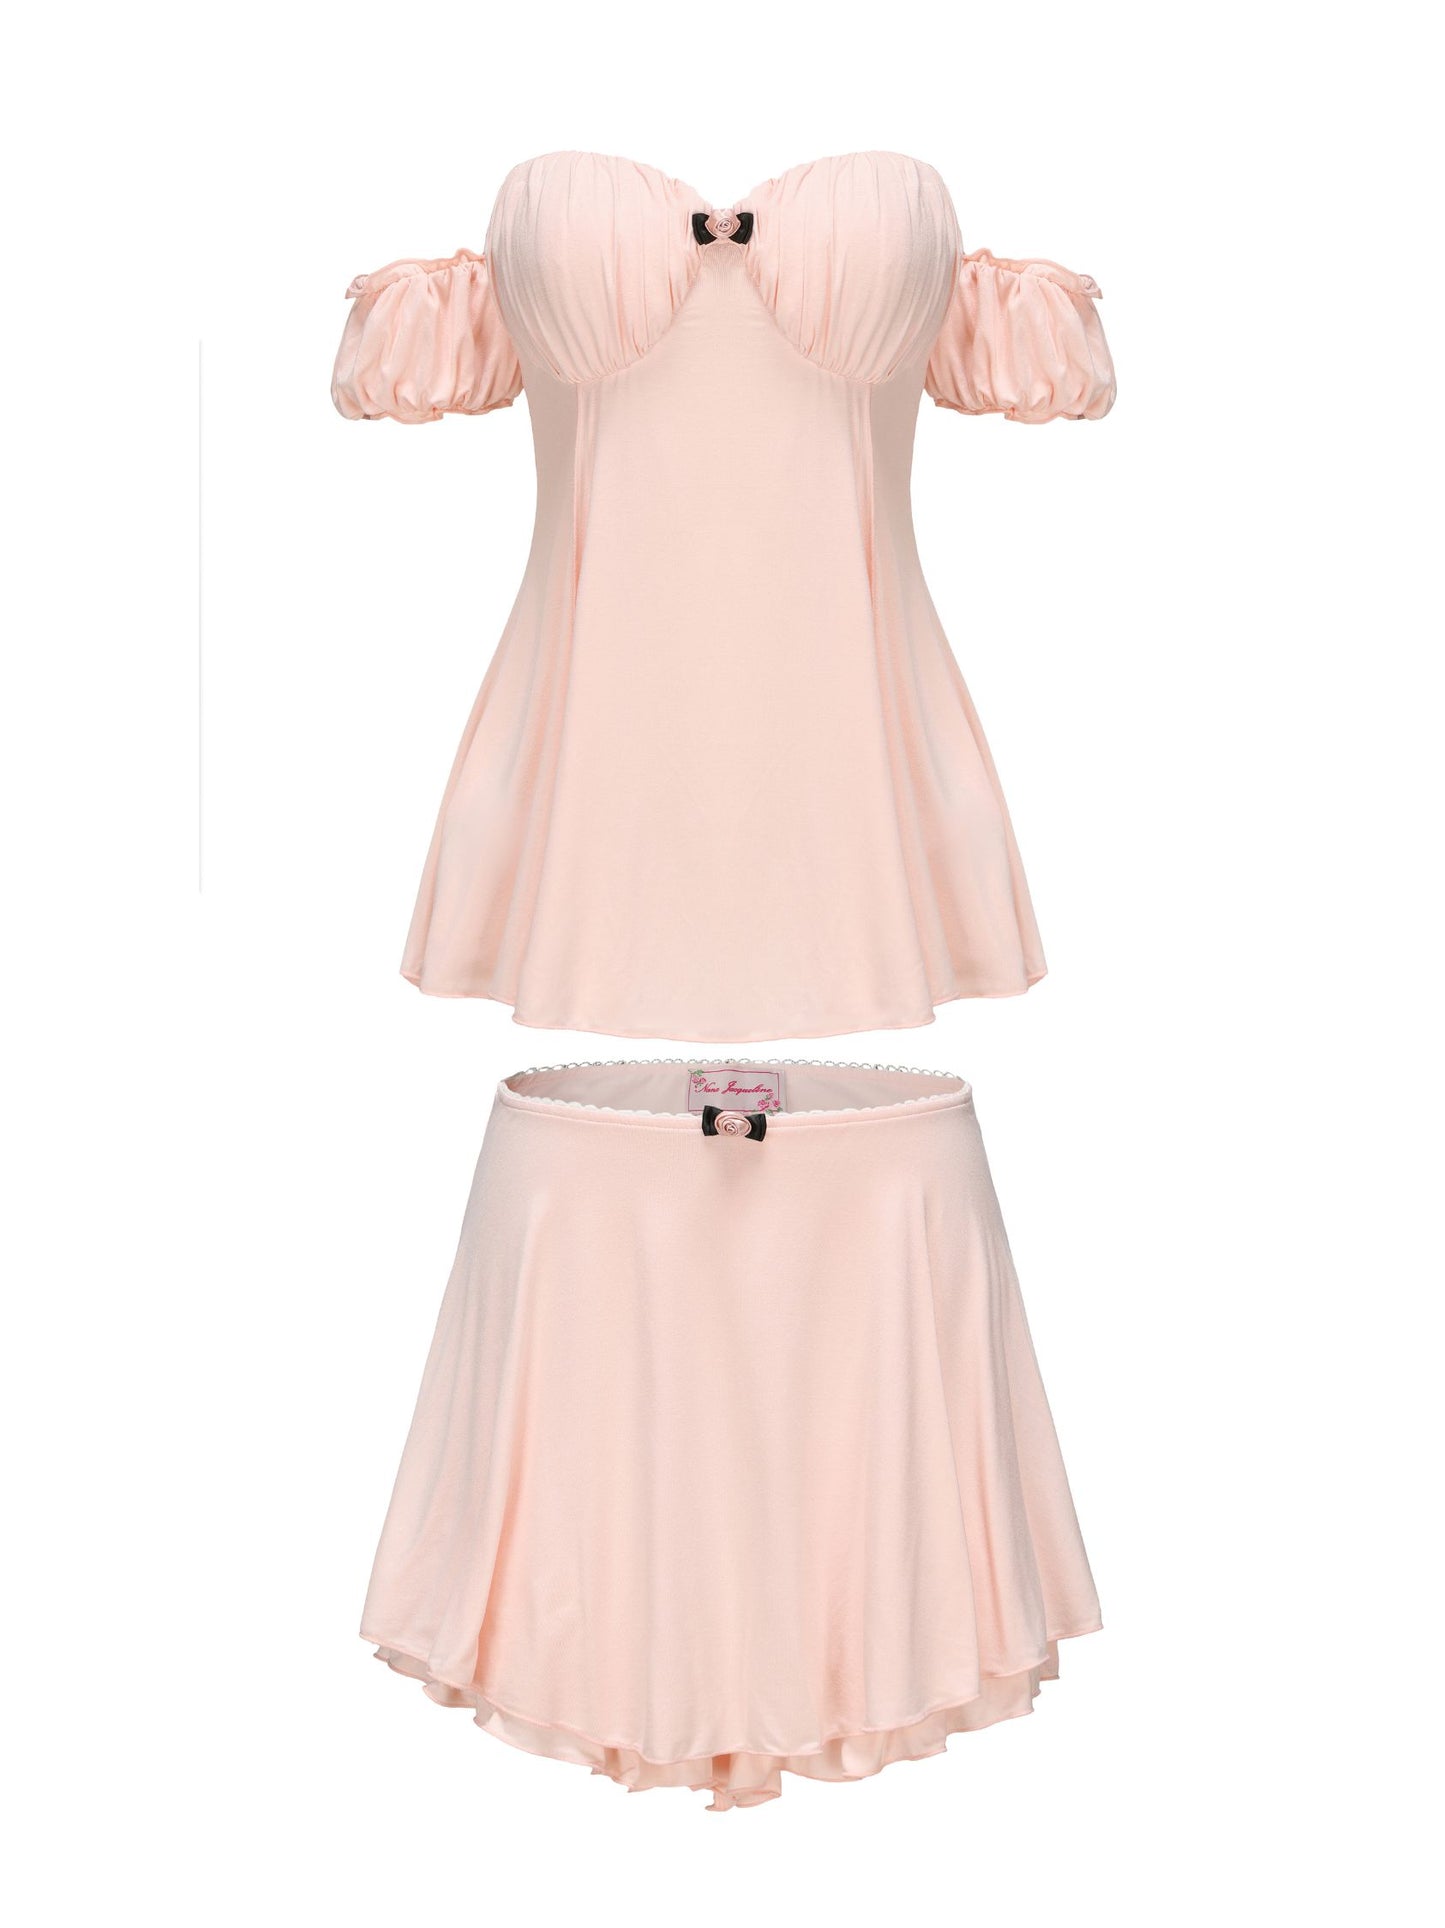 Heidi Top + Skirt (Light Pink)